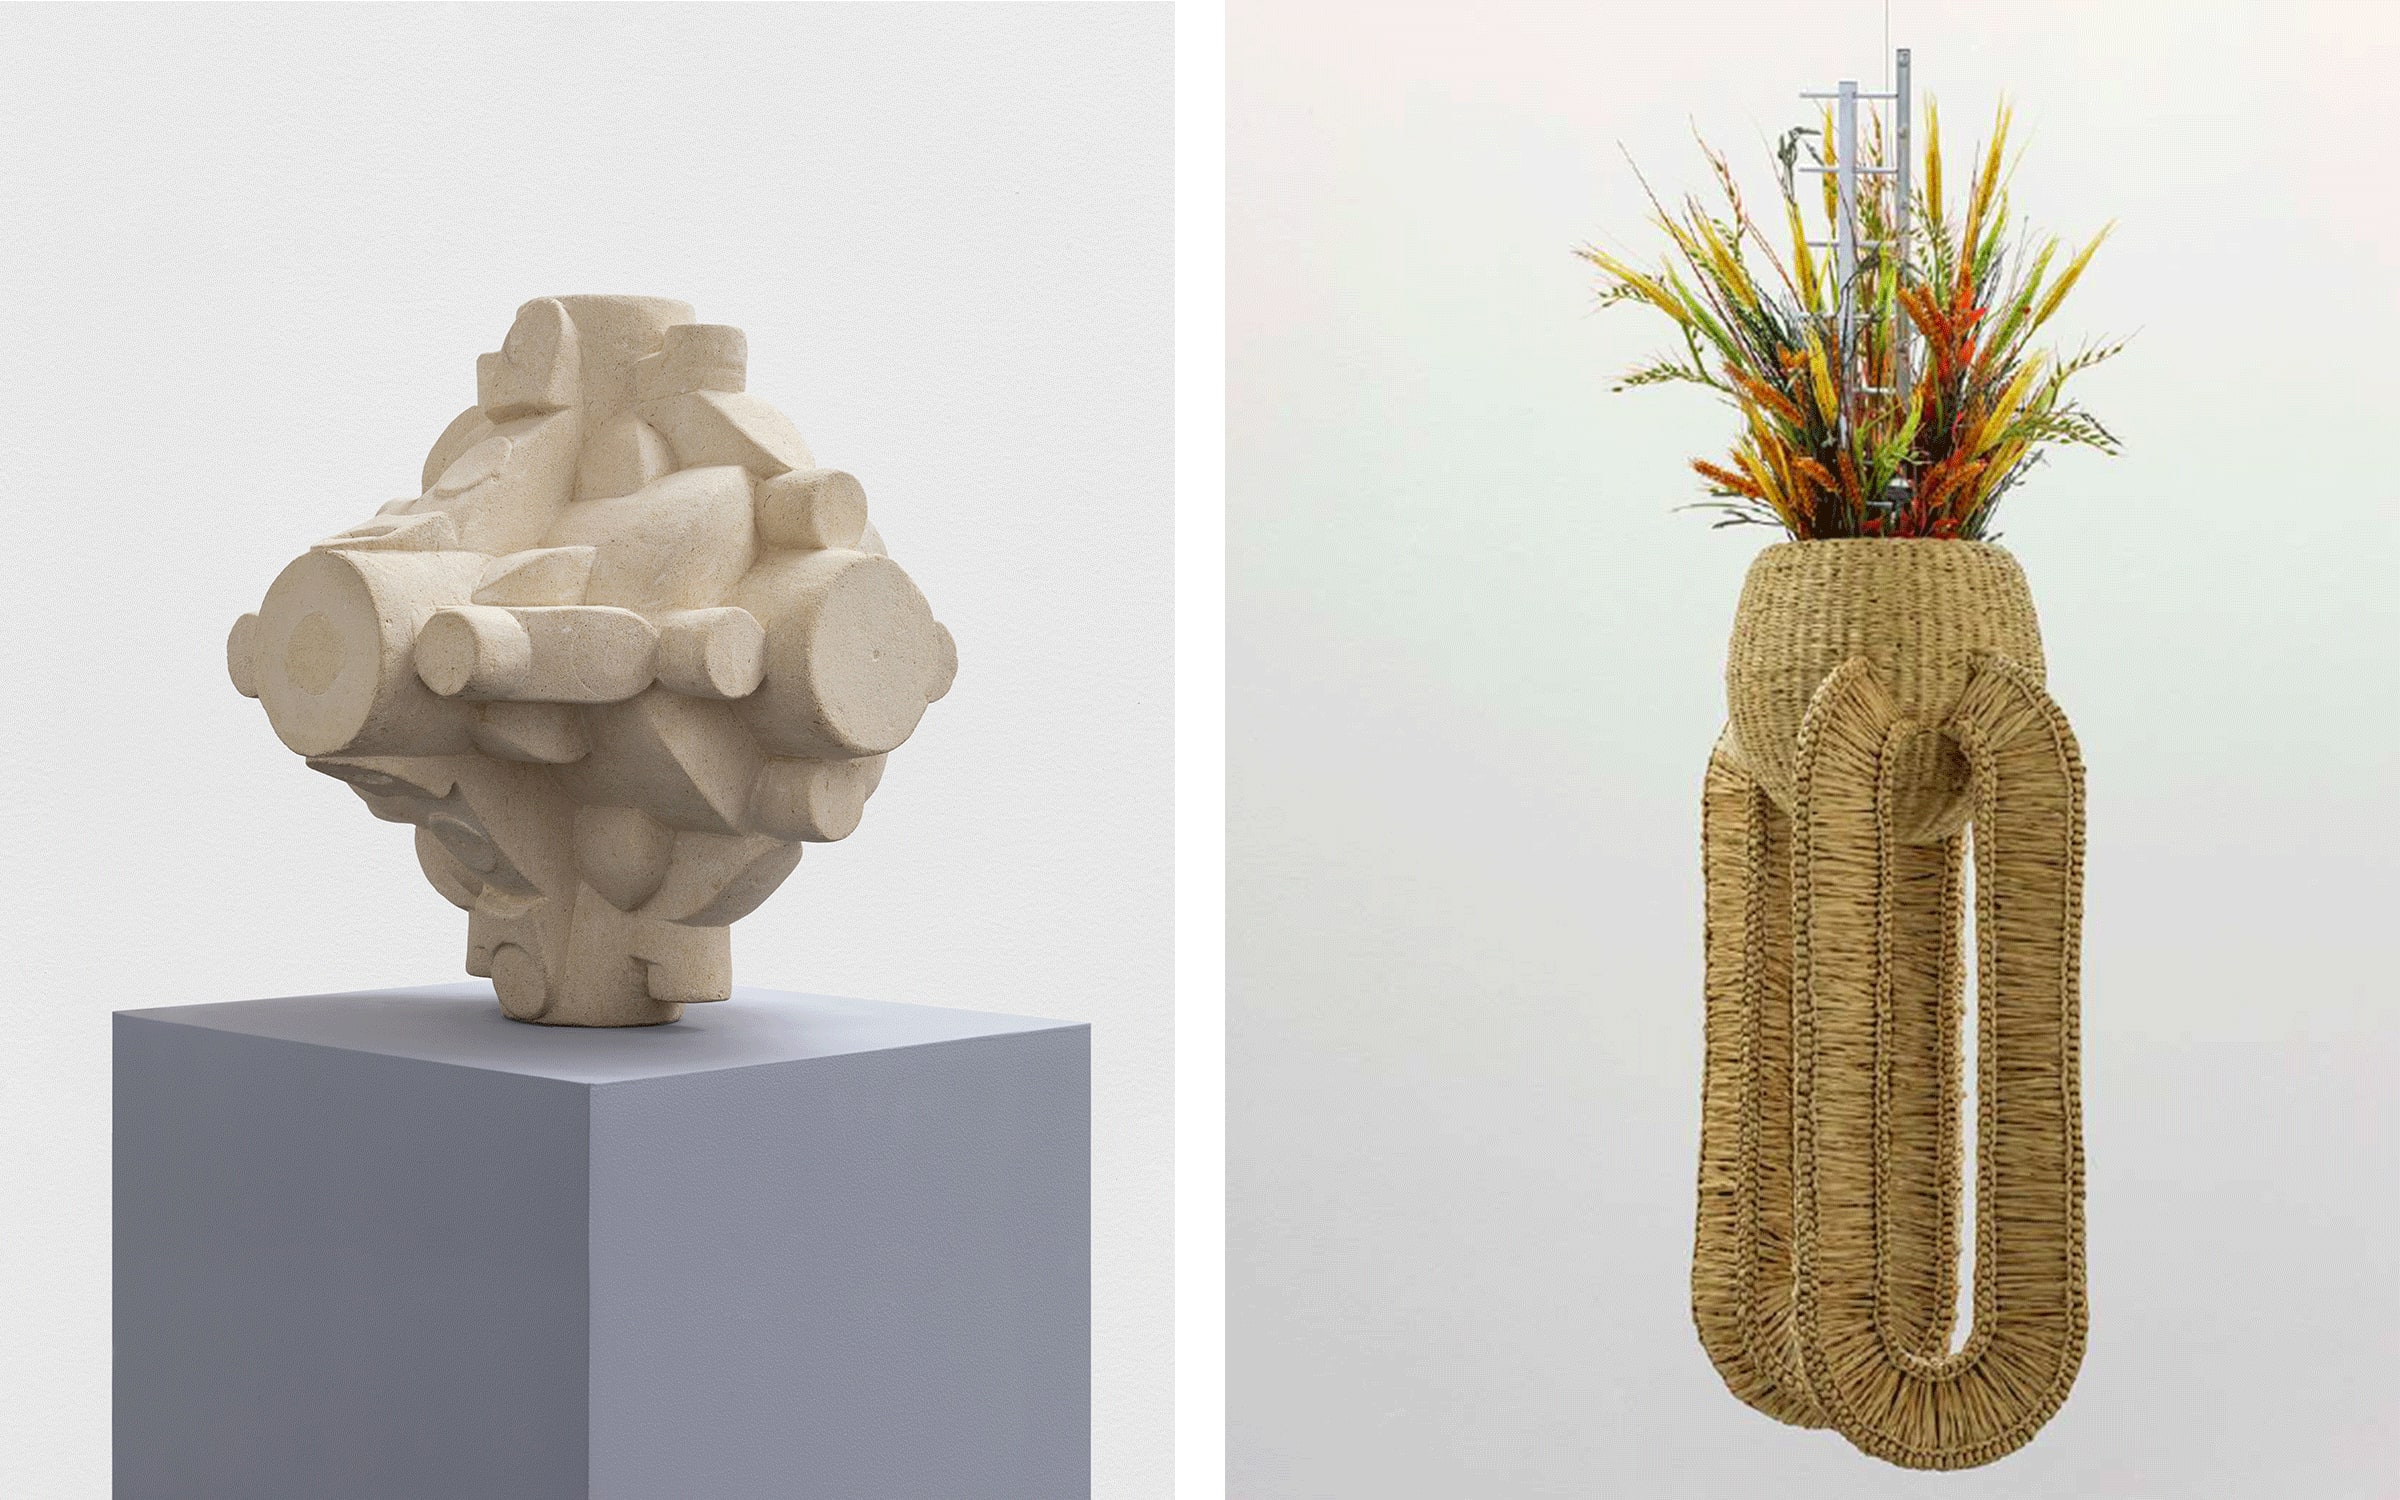 Left: Gabriel Orozco, Dé Fruit, 2017. Courtesy of the artist. Right: Haegue Yang, The Intermediate – Antenna Basket on Rings, 2017. Courtesy of the artist and kurimanzutto, Mexico City / New York.